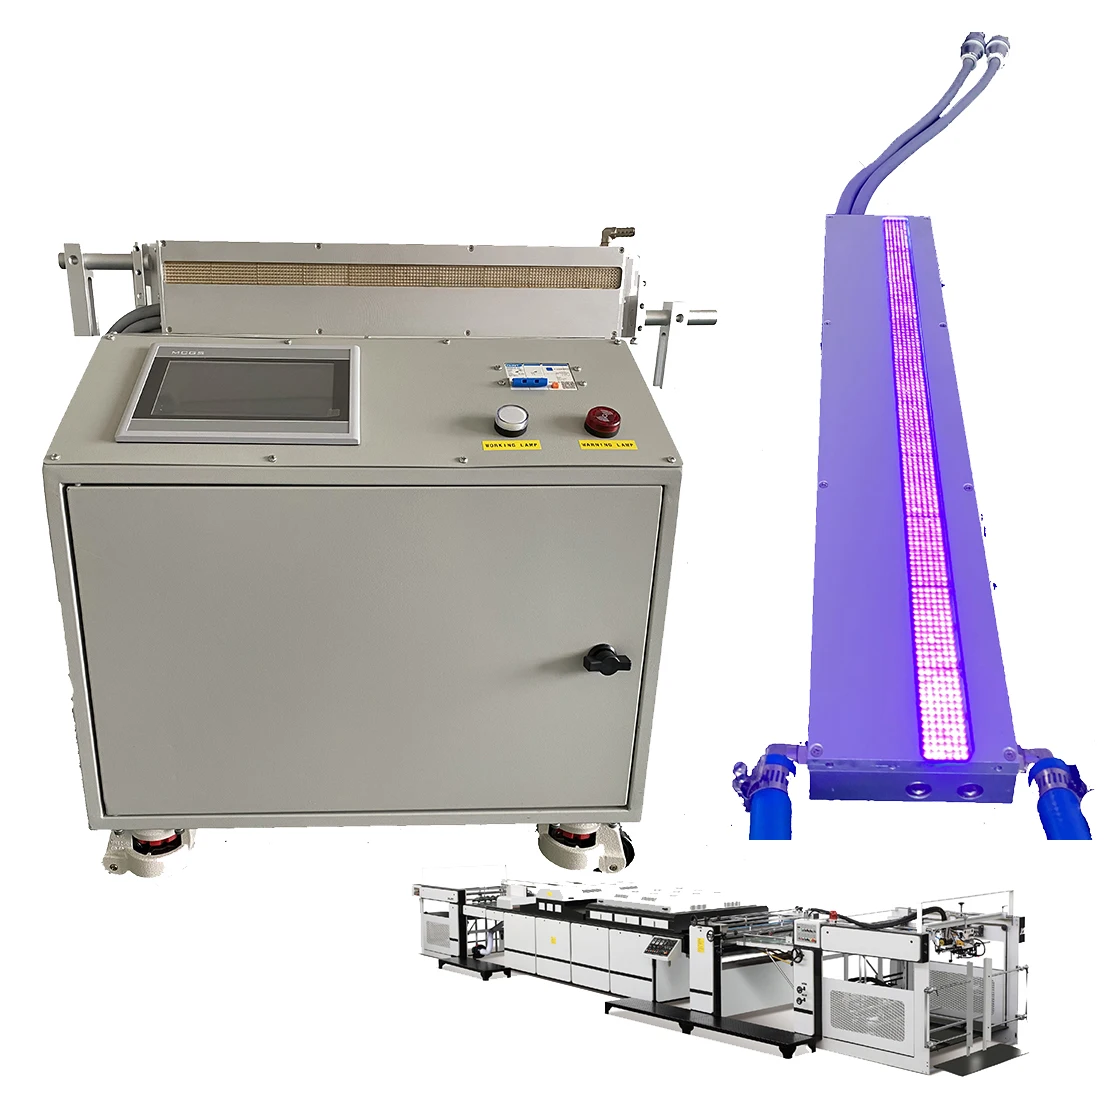 Led Uv Curing Machine Uva Flash Drying Light Unit Uv Lamp Cure Dryer For Screen Offset Printing Digital Printer Varnish Paint